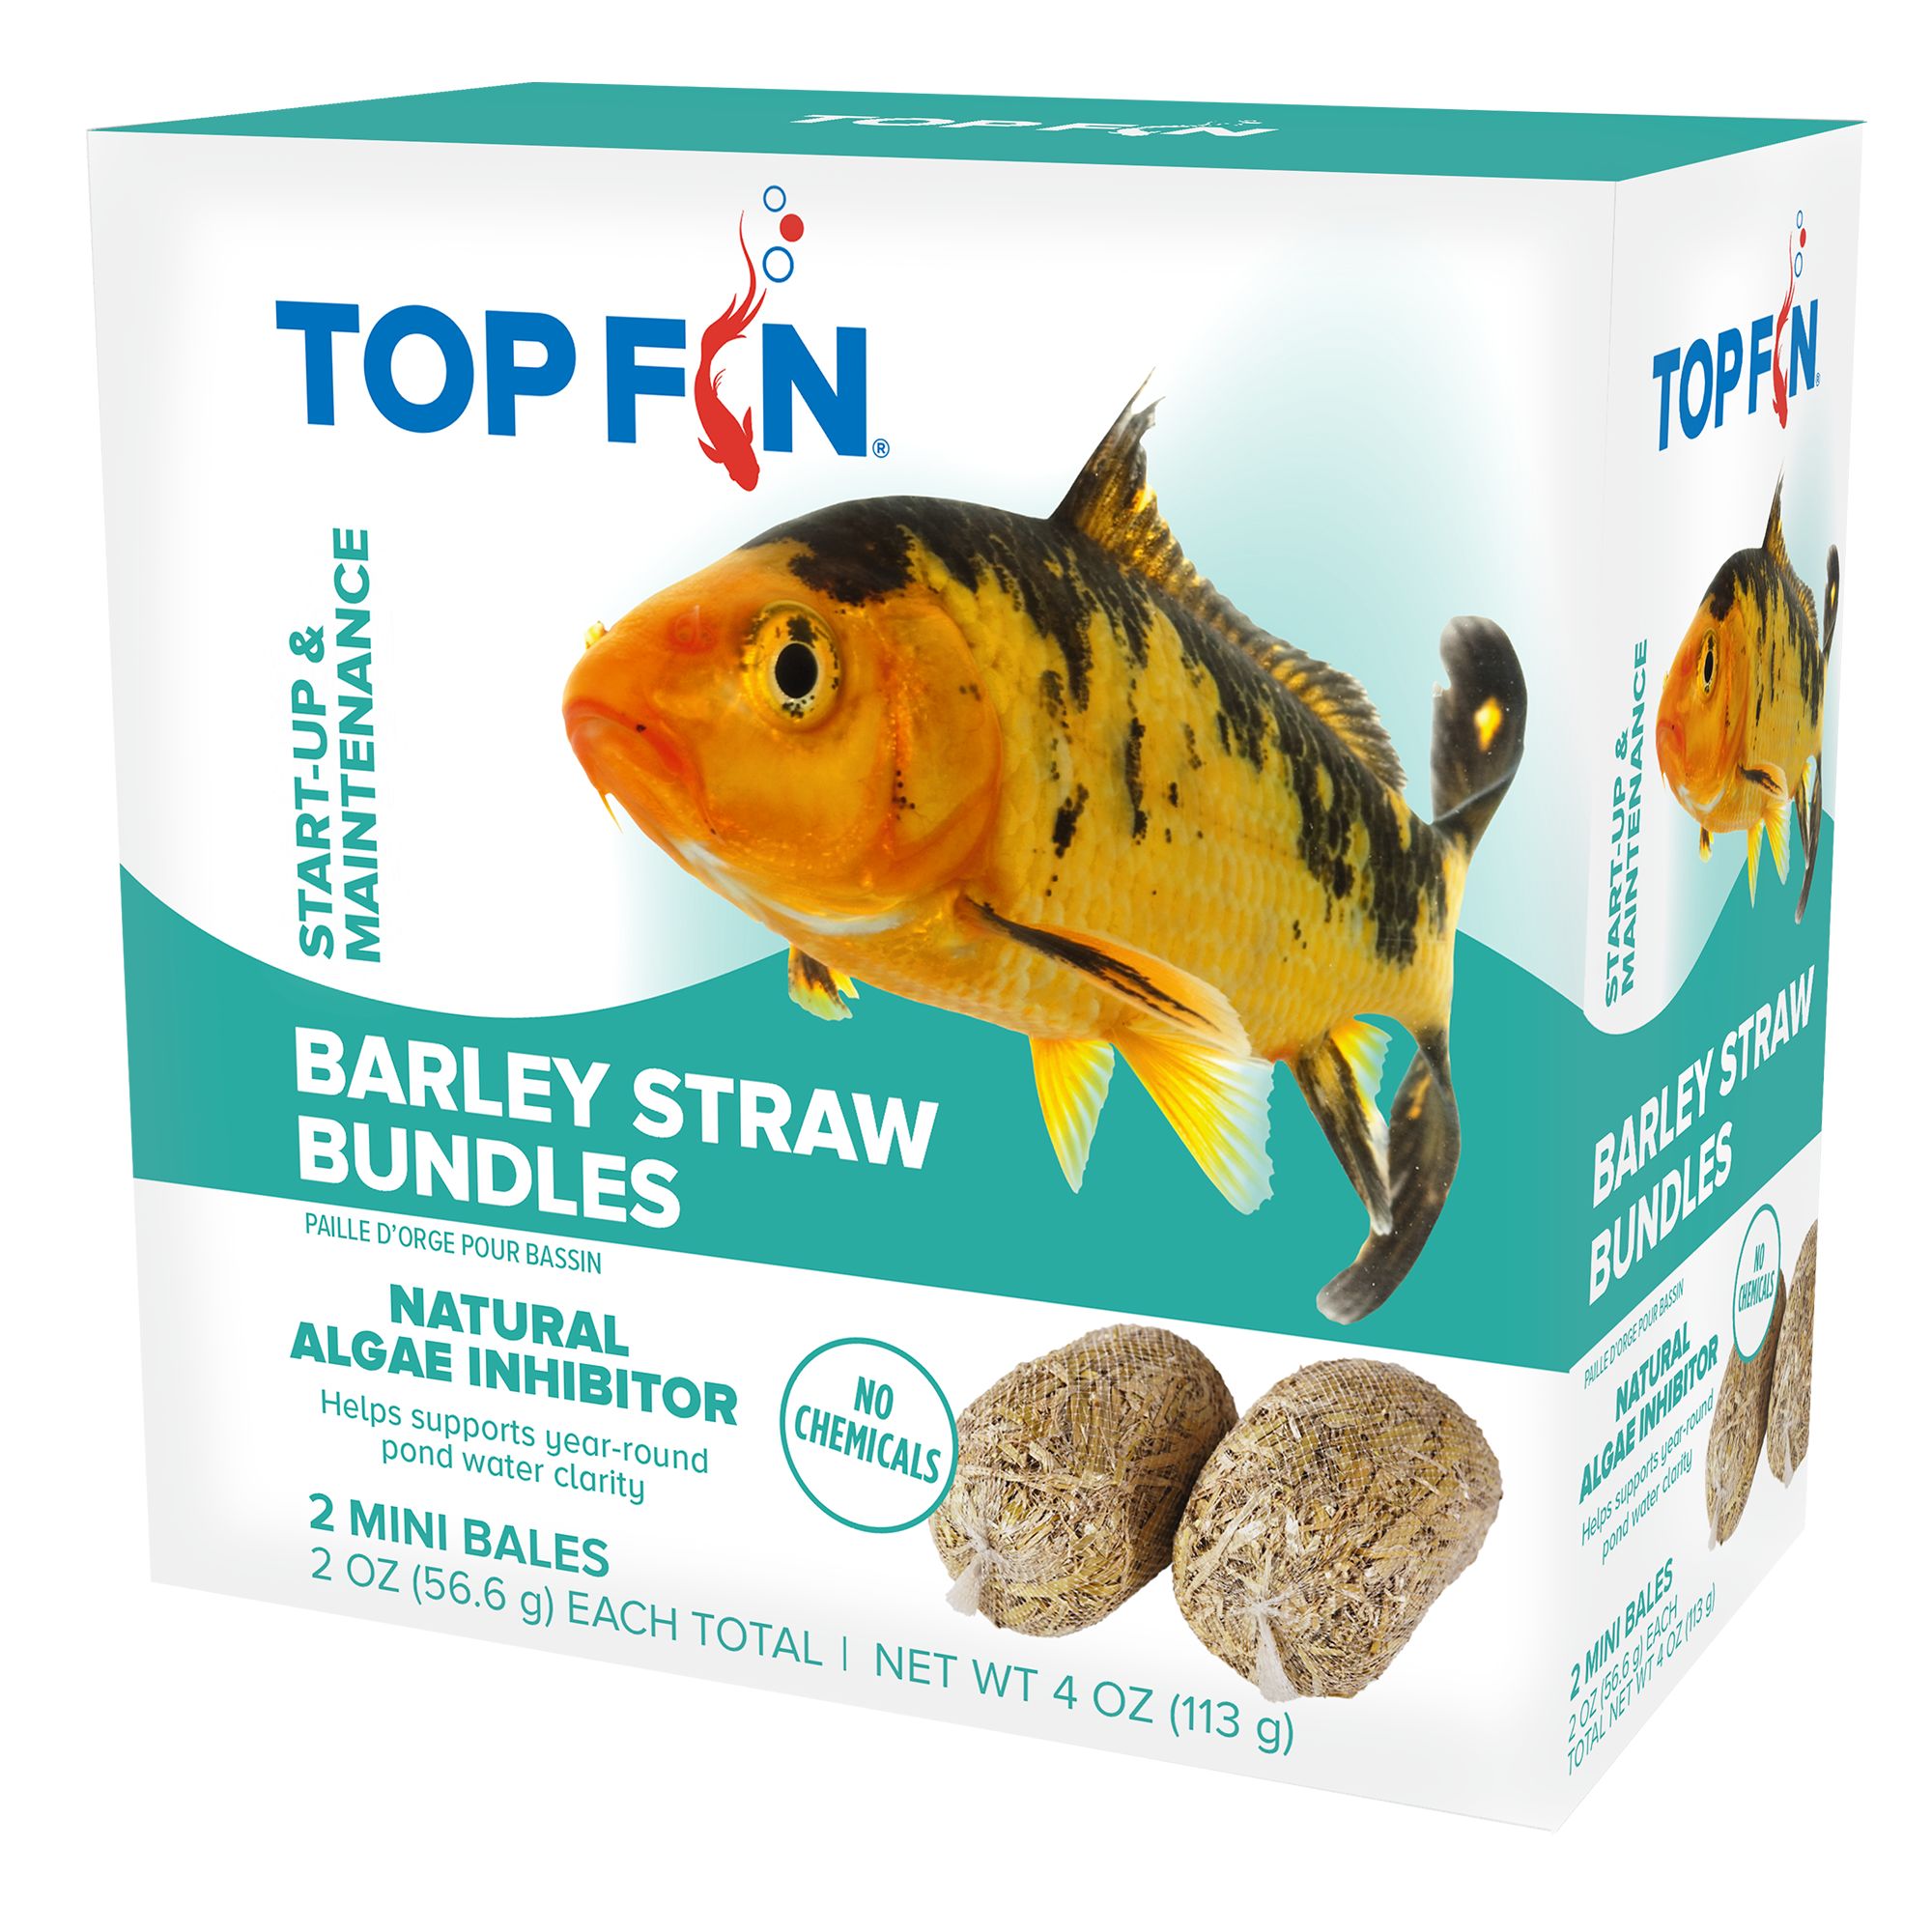 Barley straw for natural algae treatment in pond ponds fish tank filter aquarium 